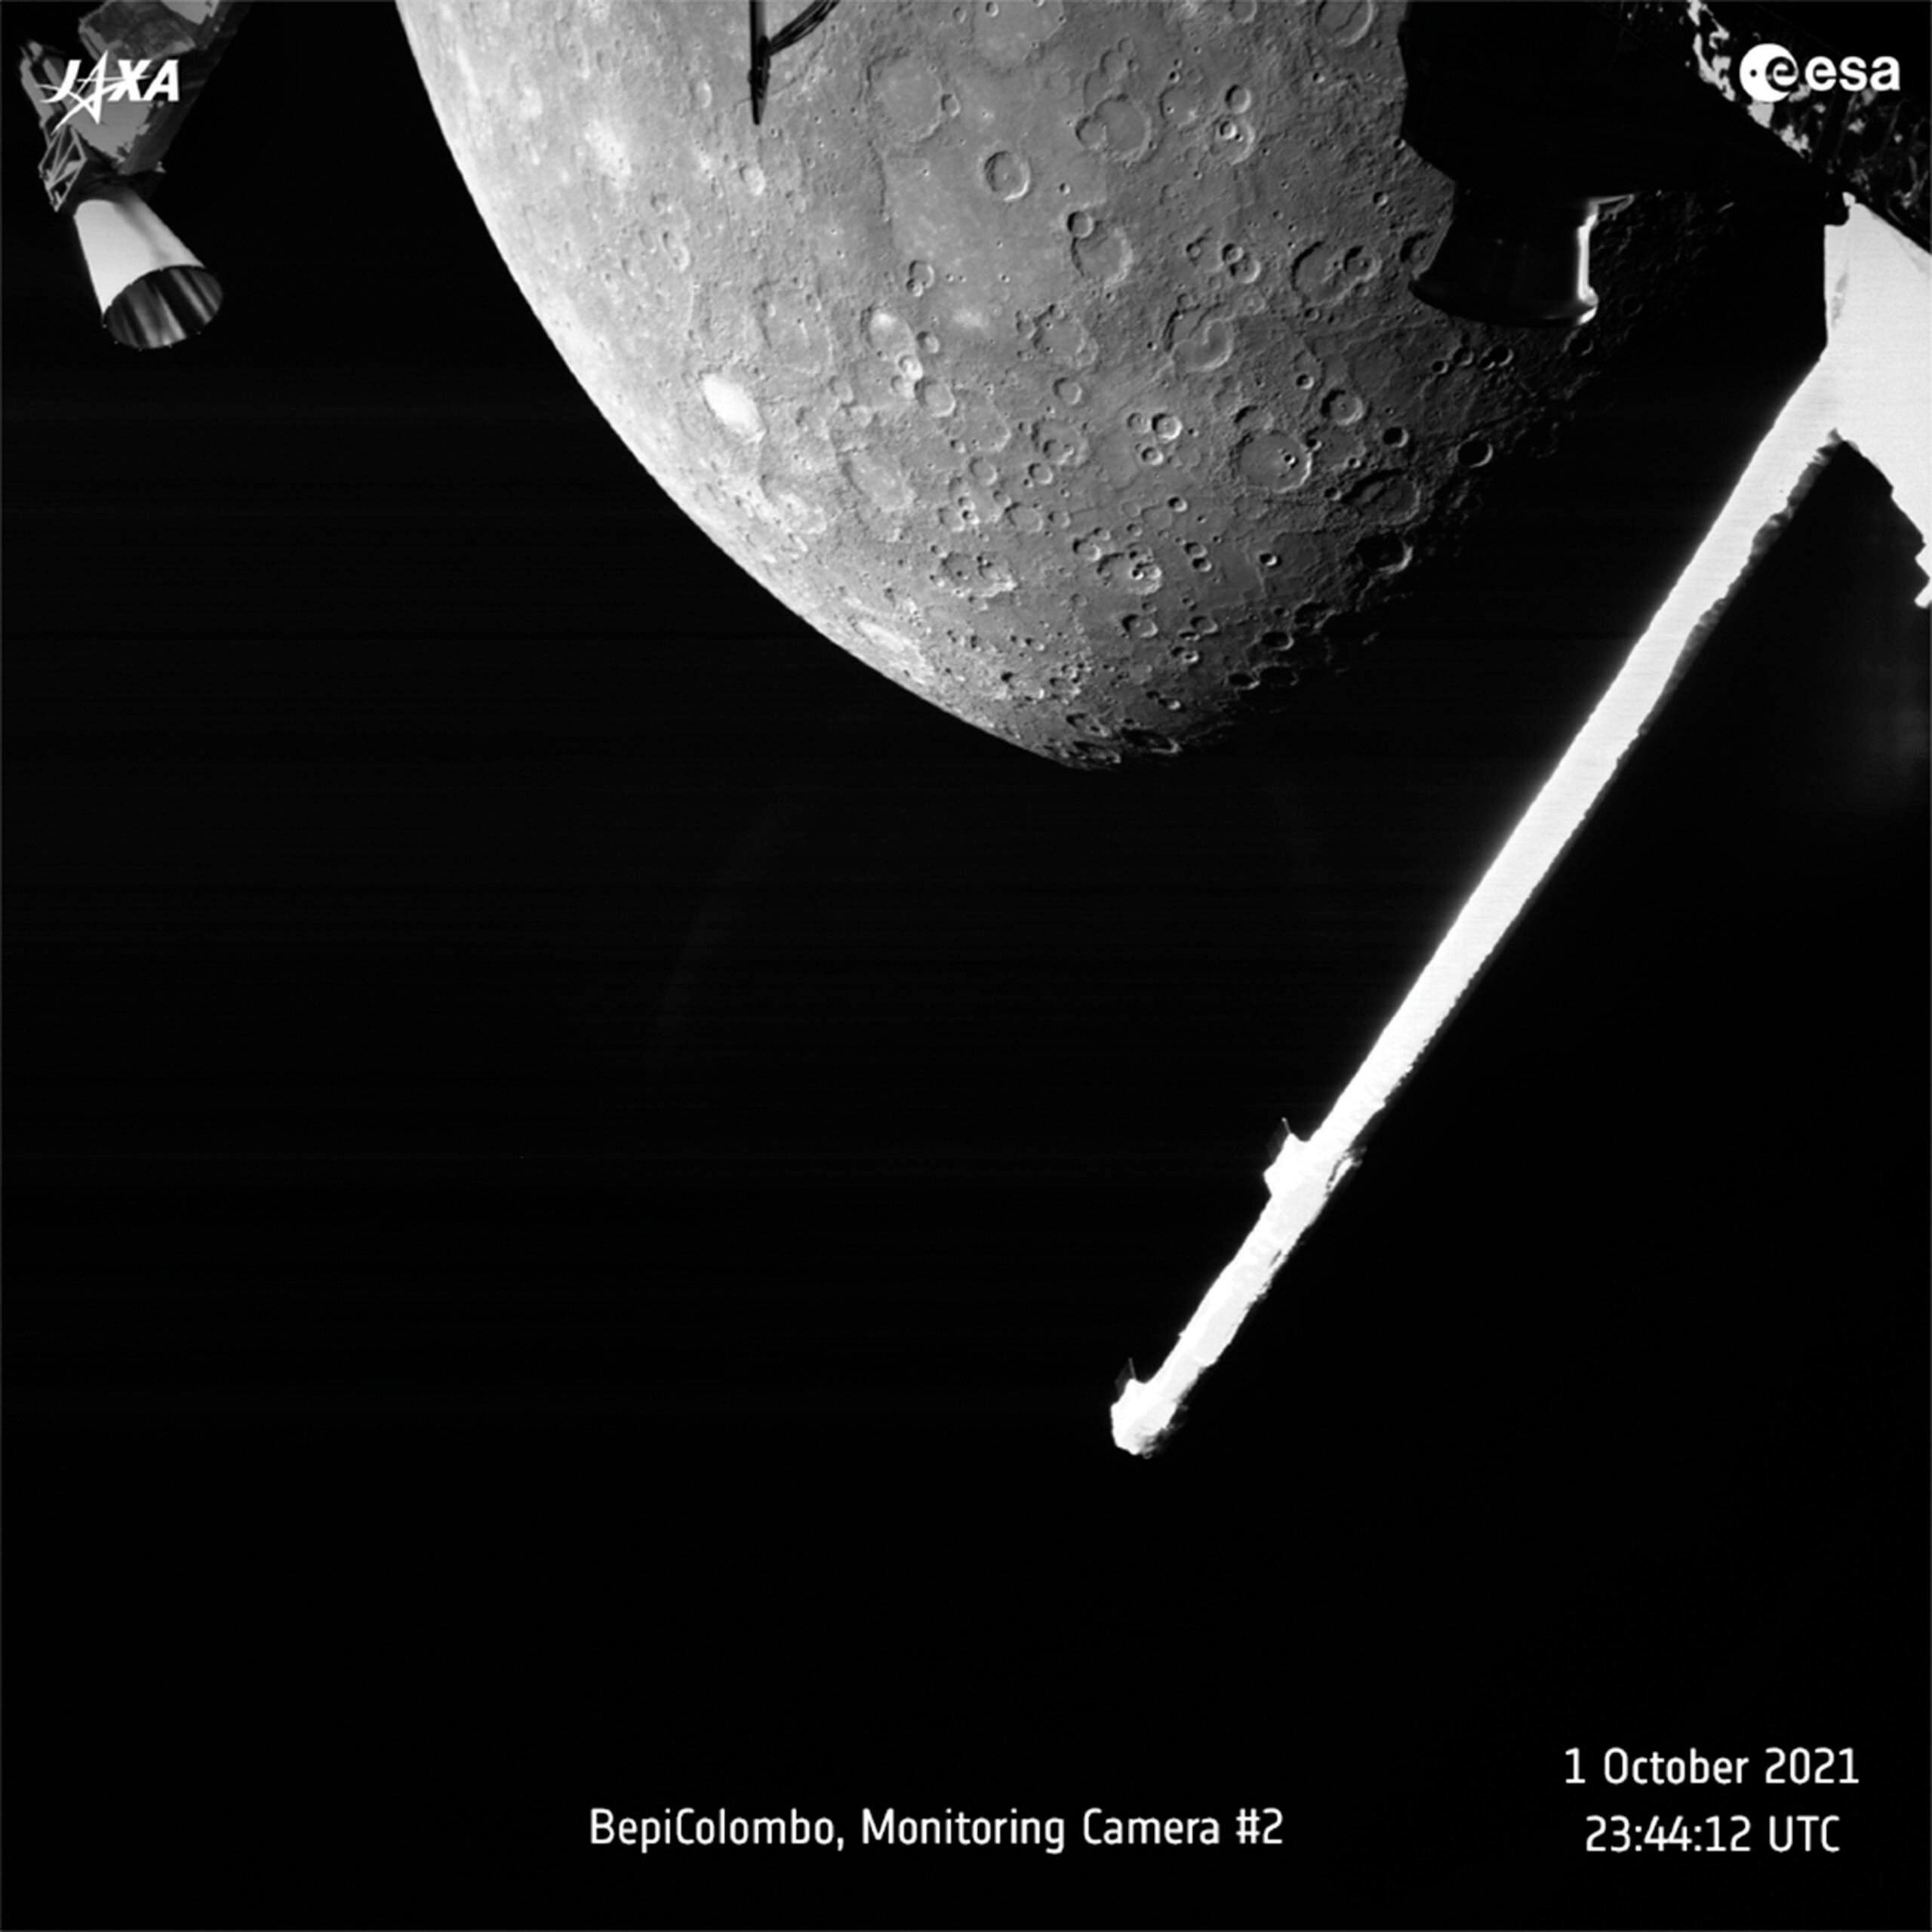 Imagen difundida por la Agencia Espacial Europea (ESA) del planeta Mercurio tomada por la sonda europea-japonesa BepiColombo.